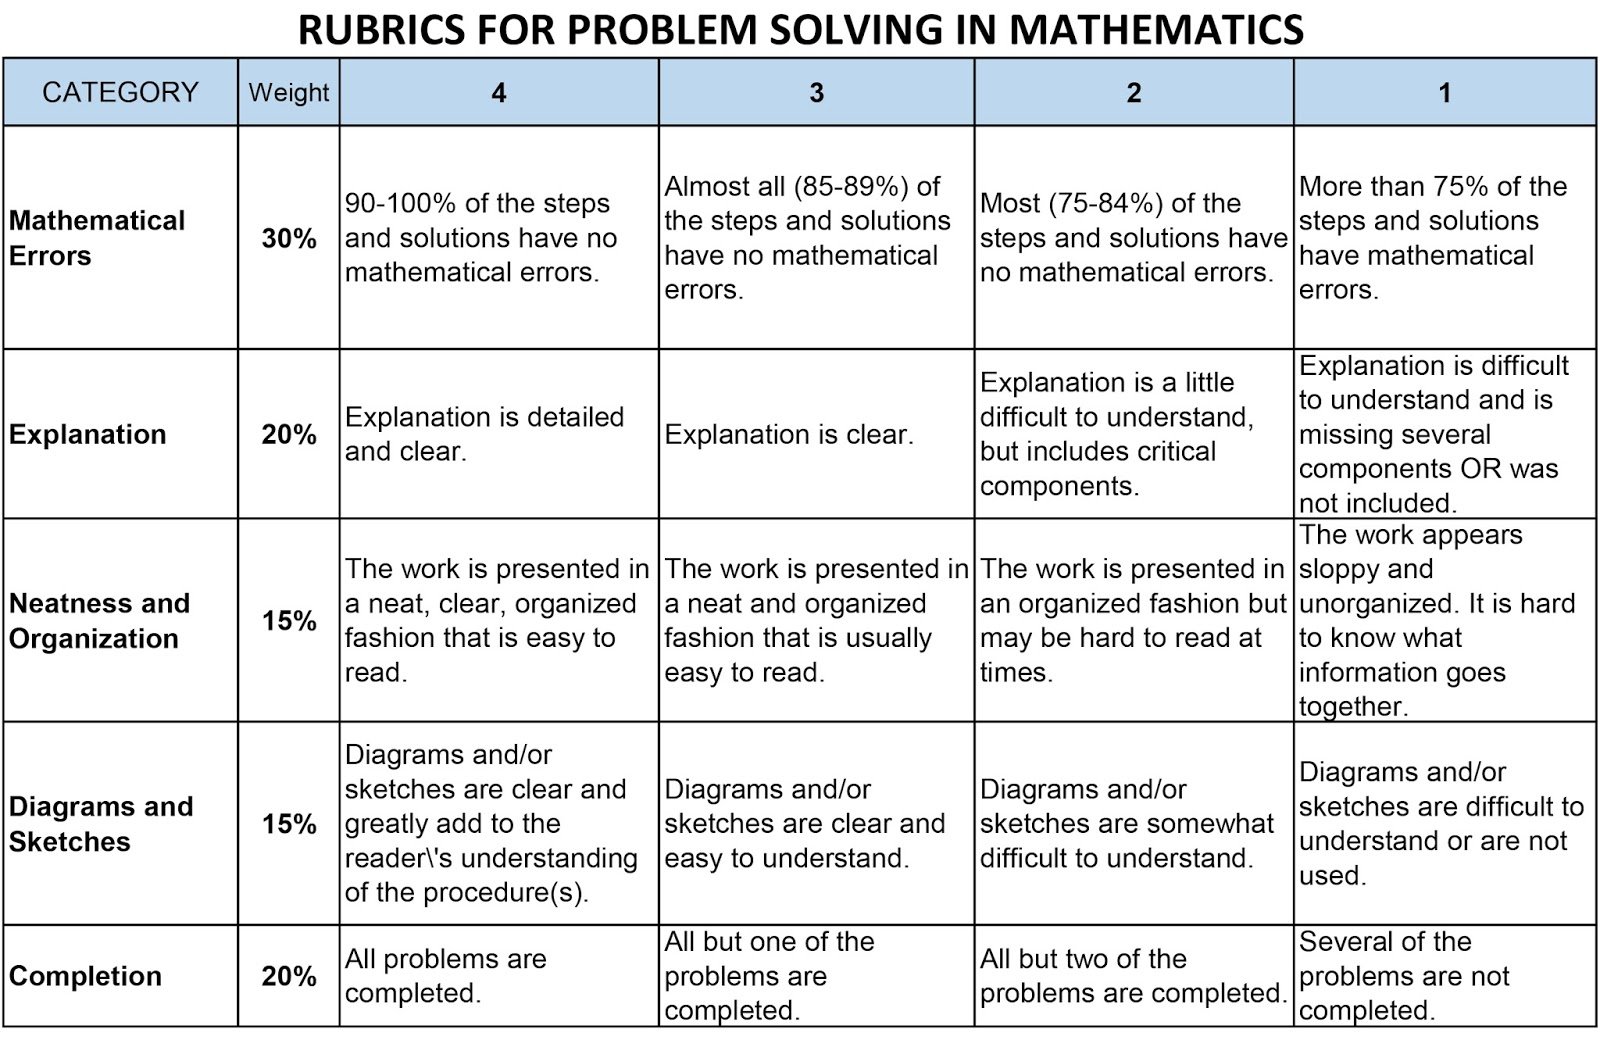 Rubrics for problem solving in mathematics